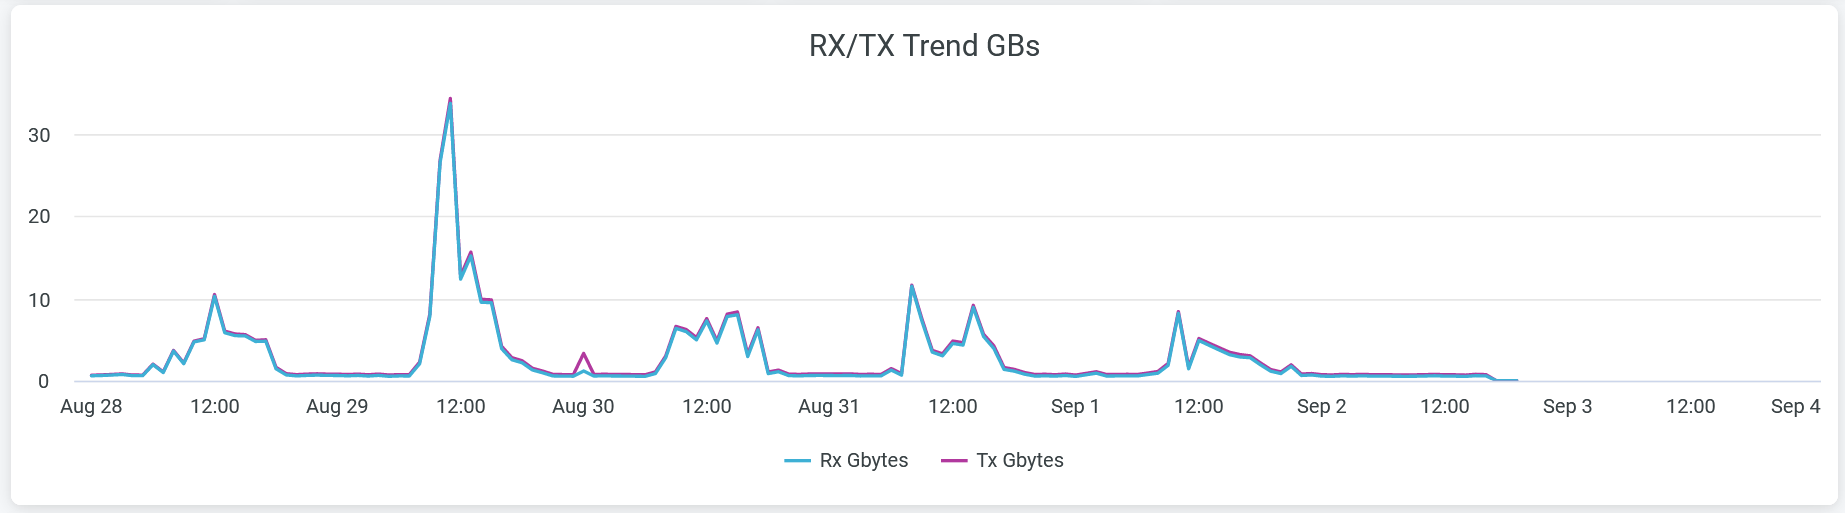 RX/TX Trend GBs